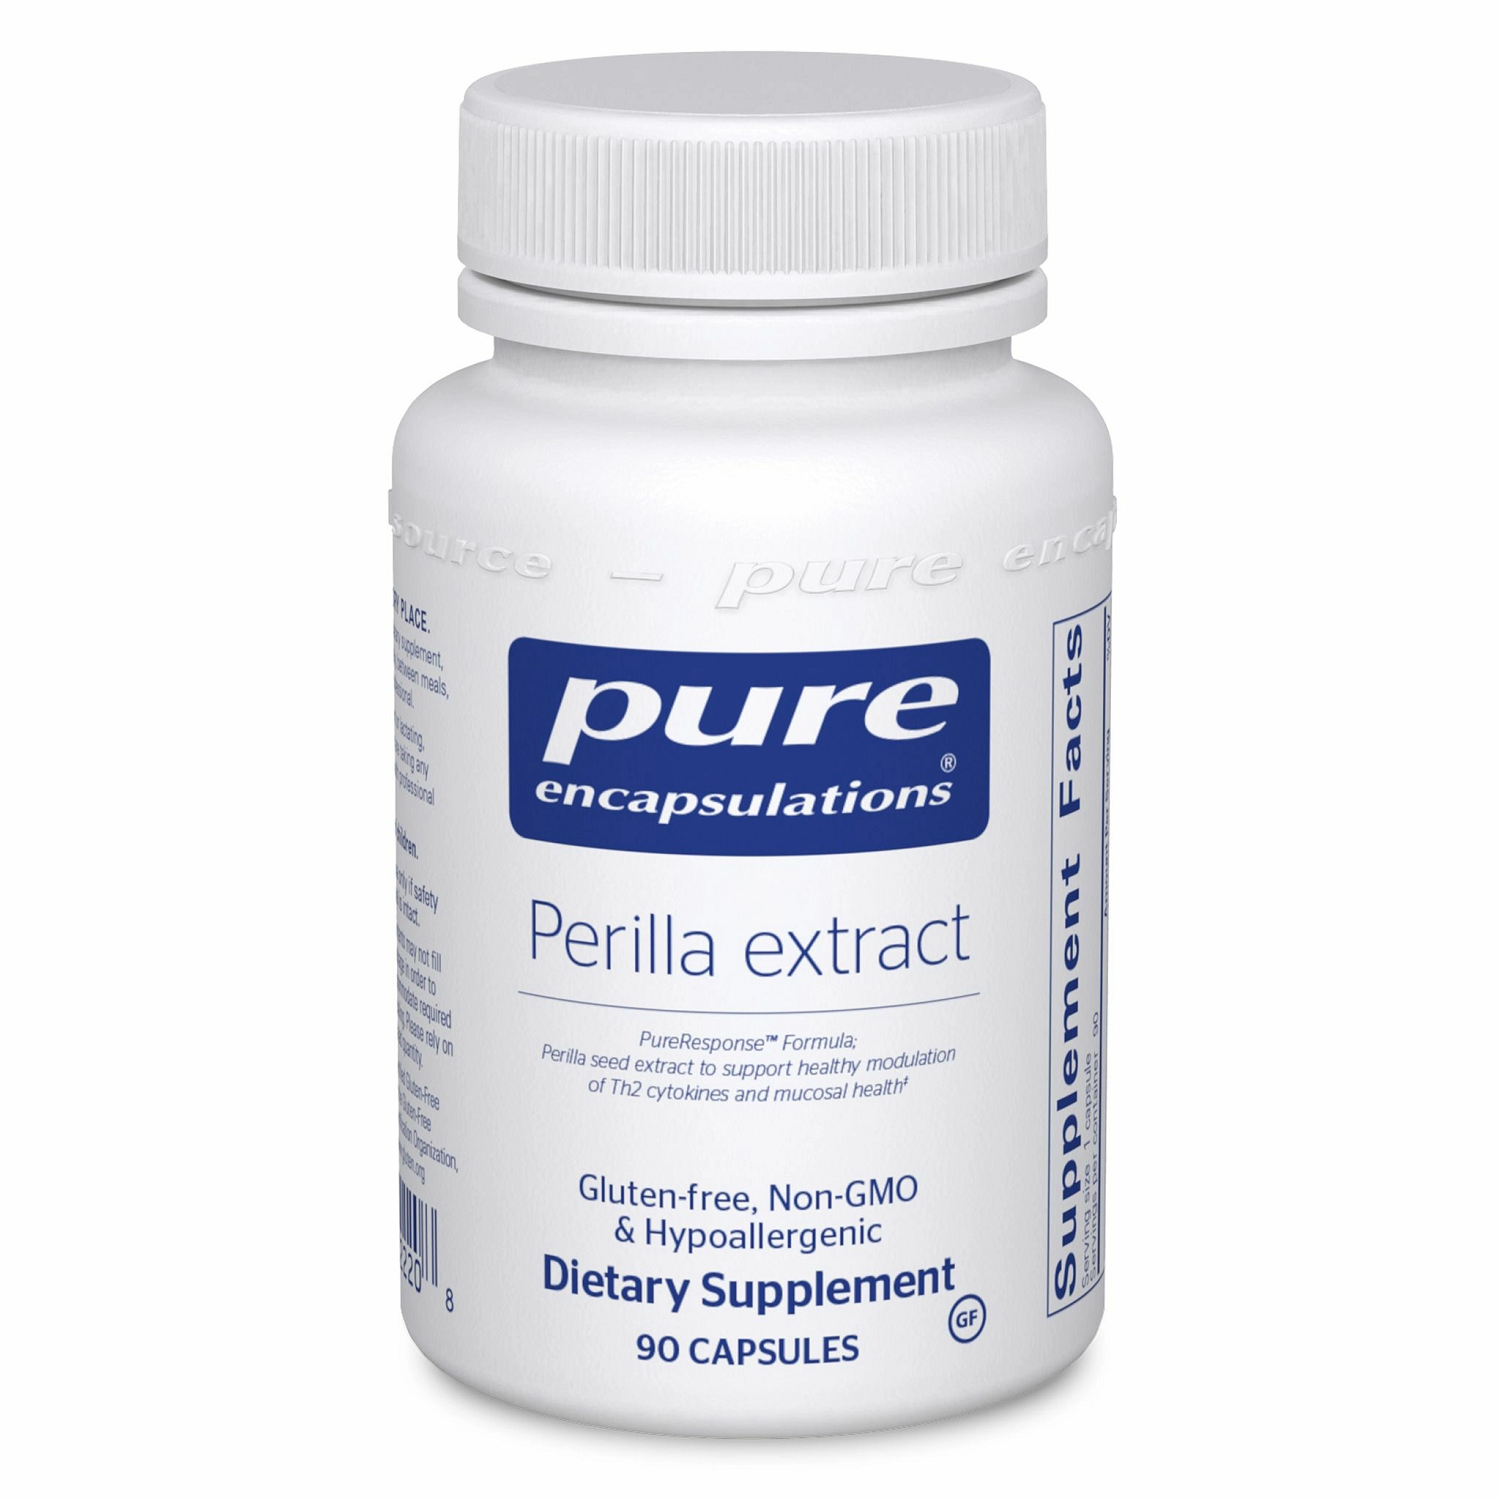 Perilla Extract